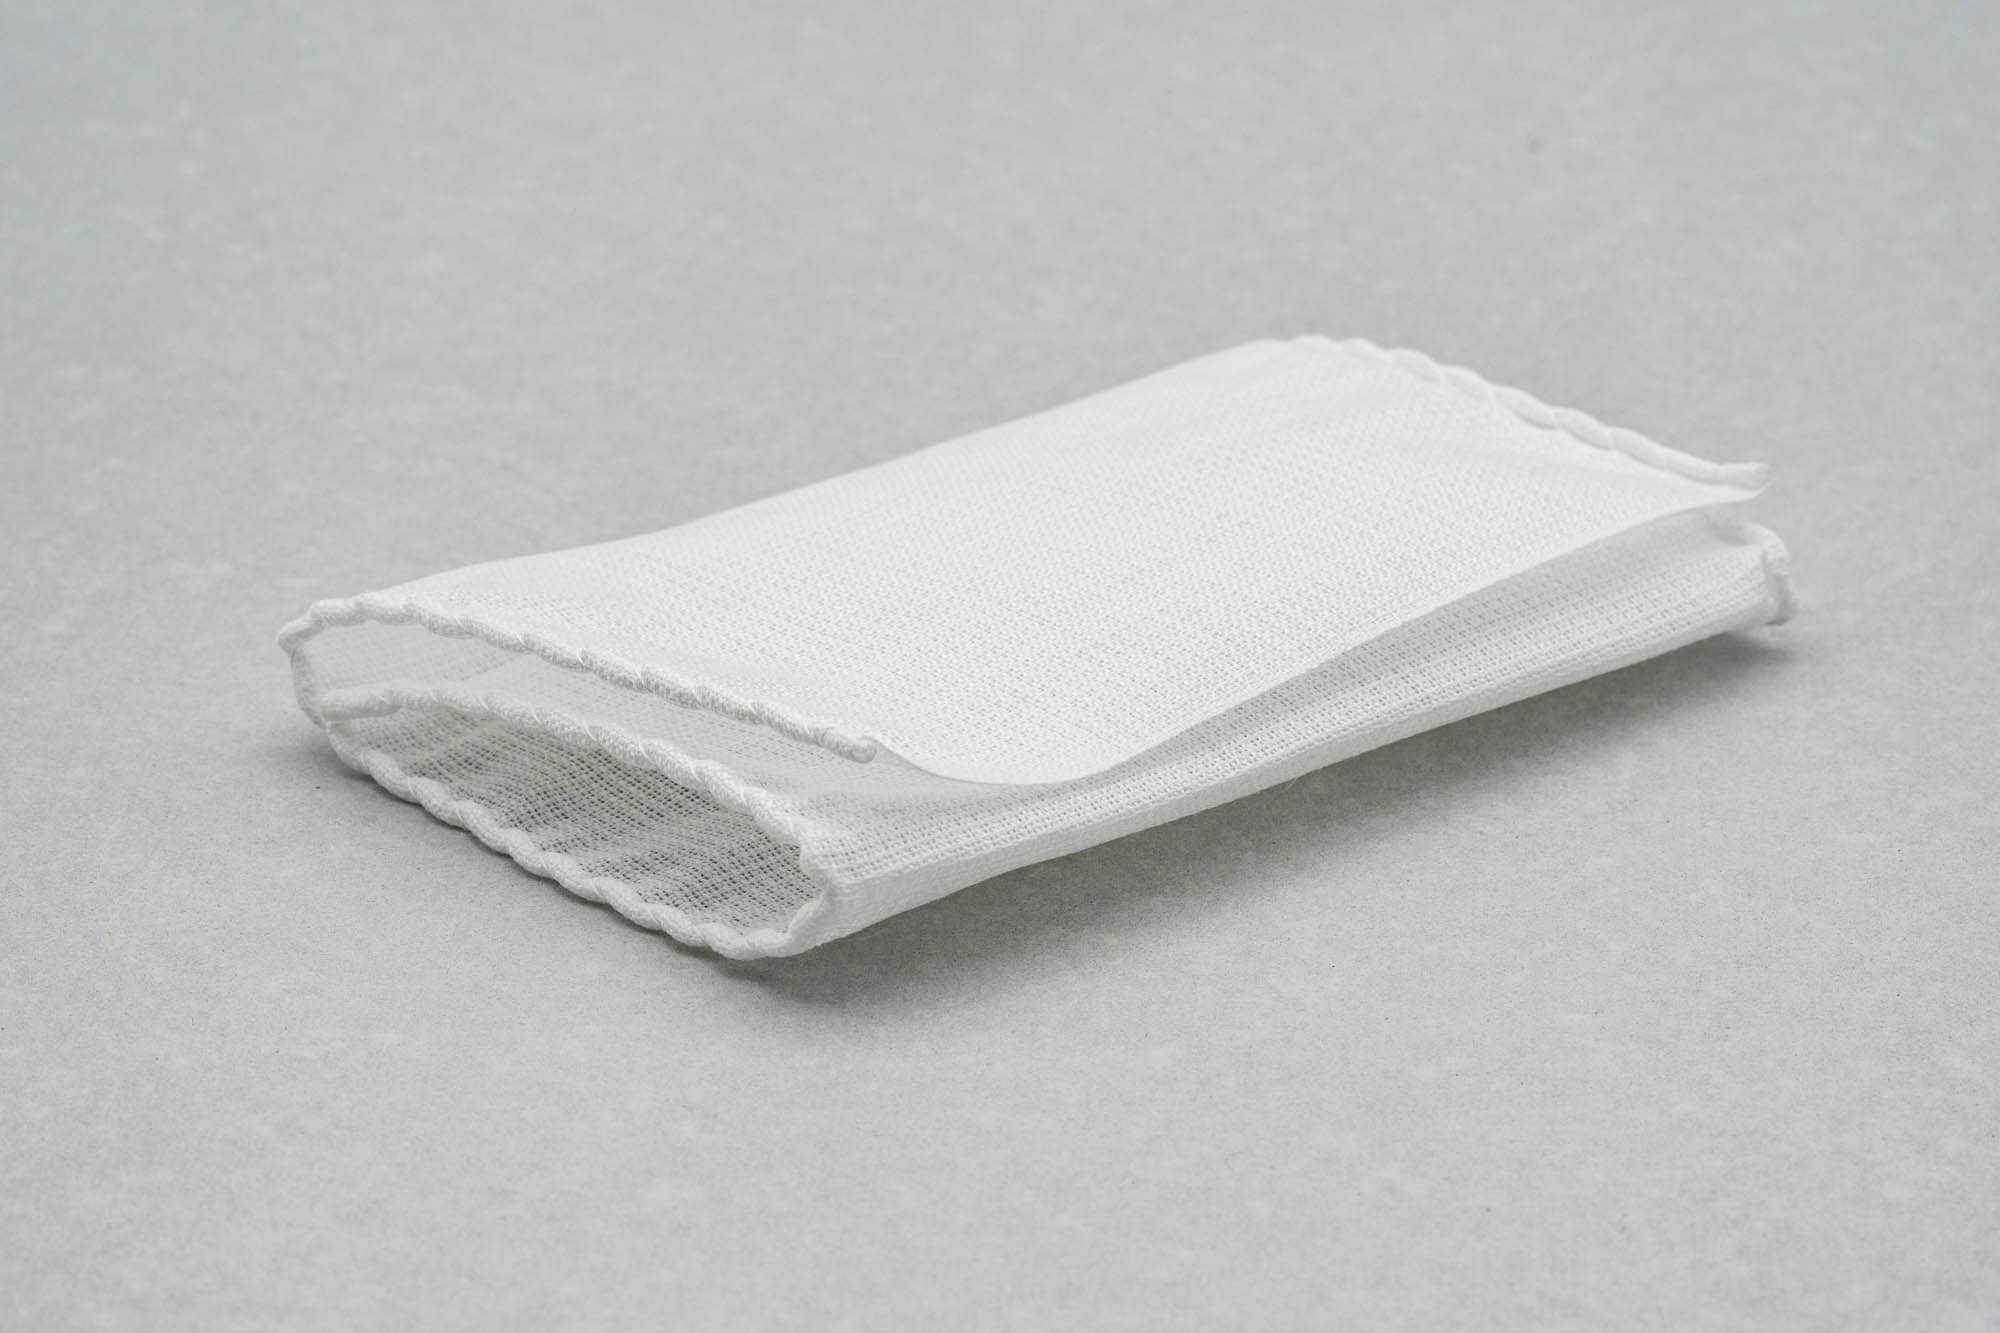 Japanese Chakin - White Linen Hoda-ori Woven Tea Cloth